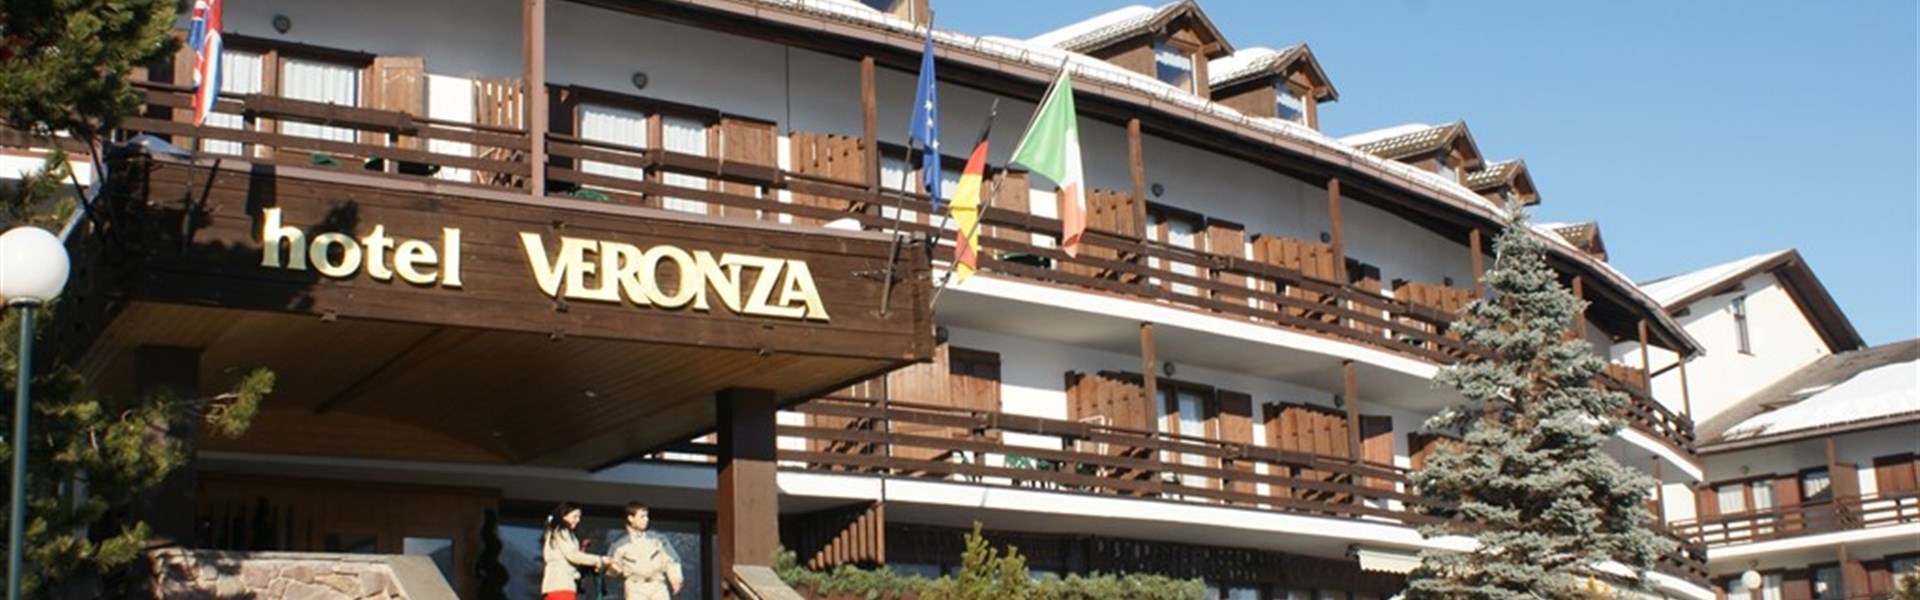 Marco Polo - Hotel Veronza Holiday Centre - 